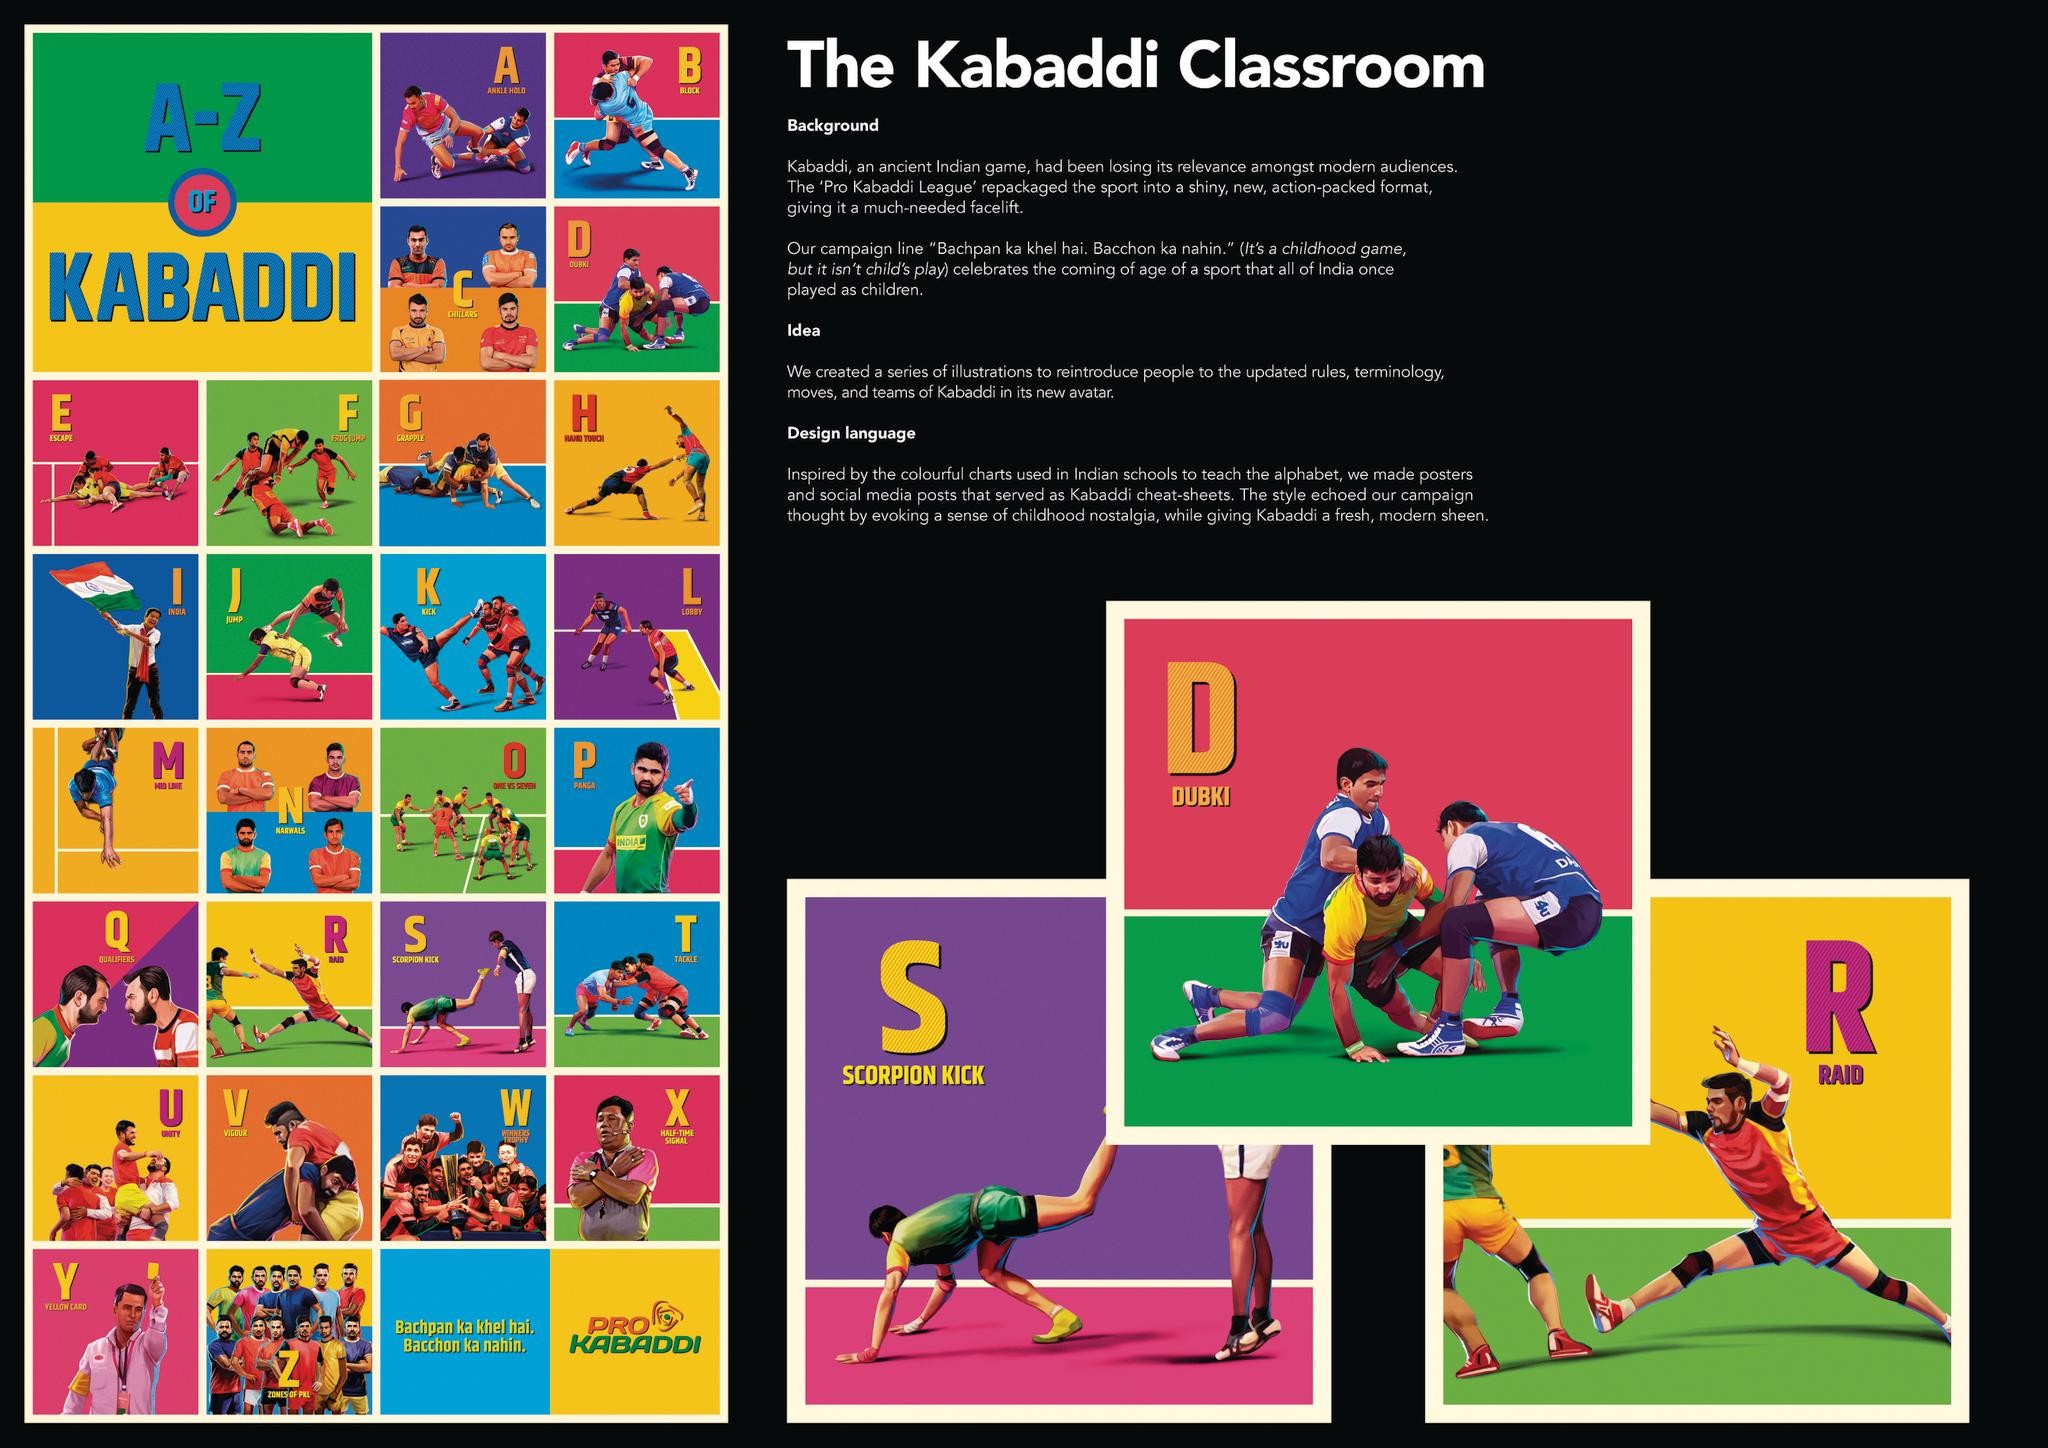 The Kabaddi Classroom